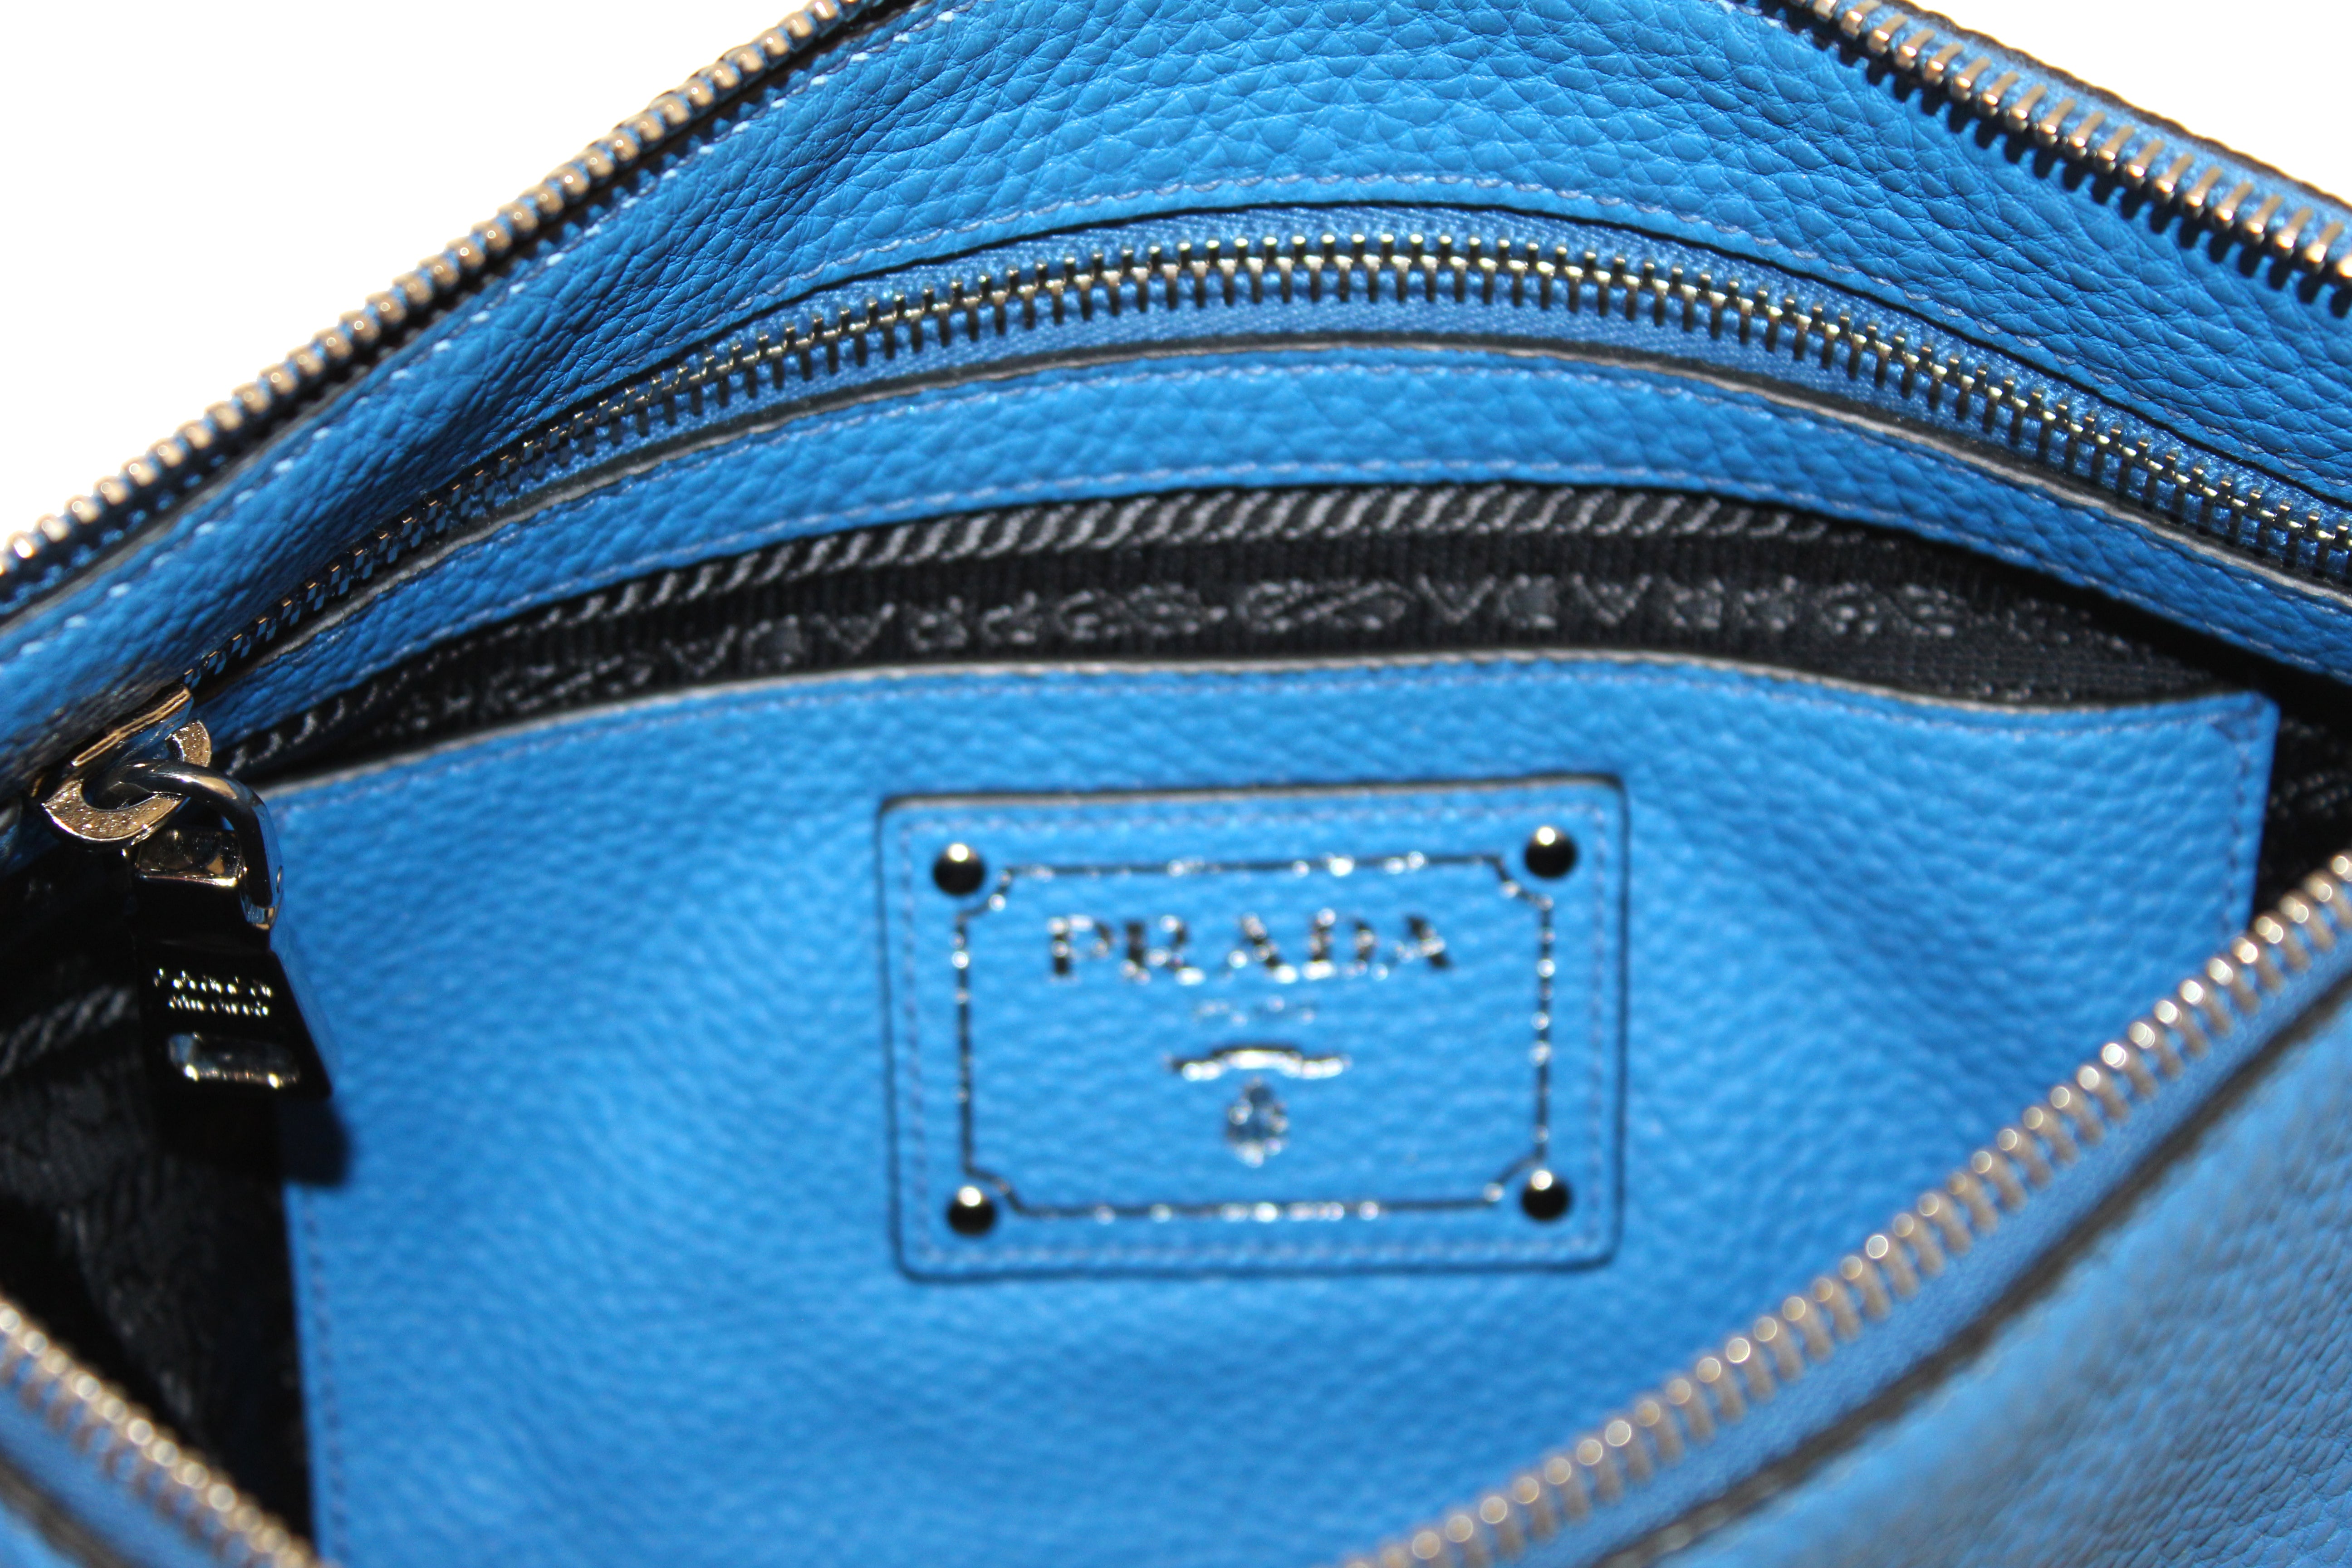 Authentic Prada Blue Calfskin Leather Messenger Bag